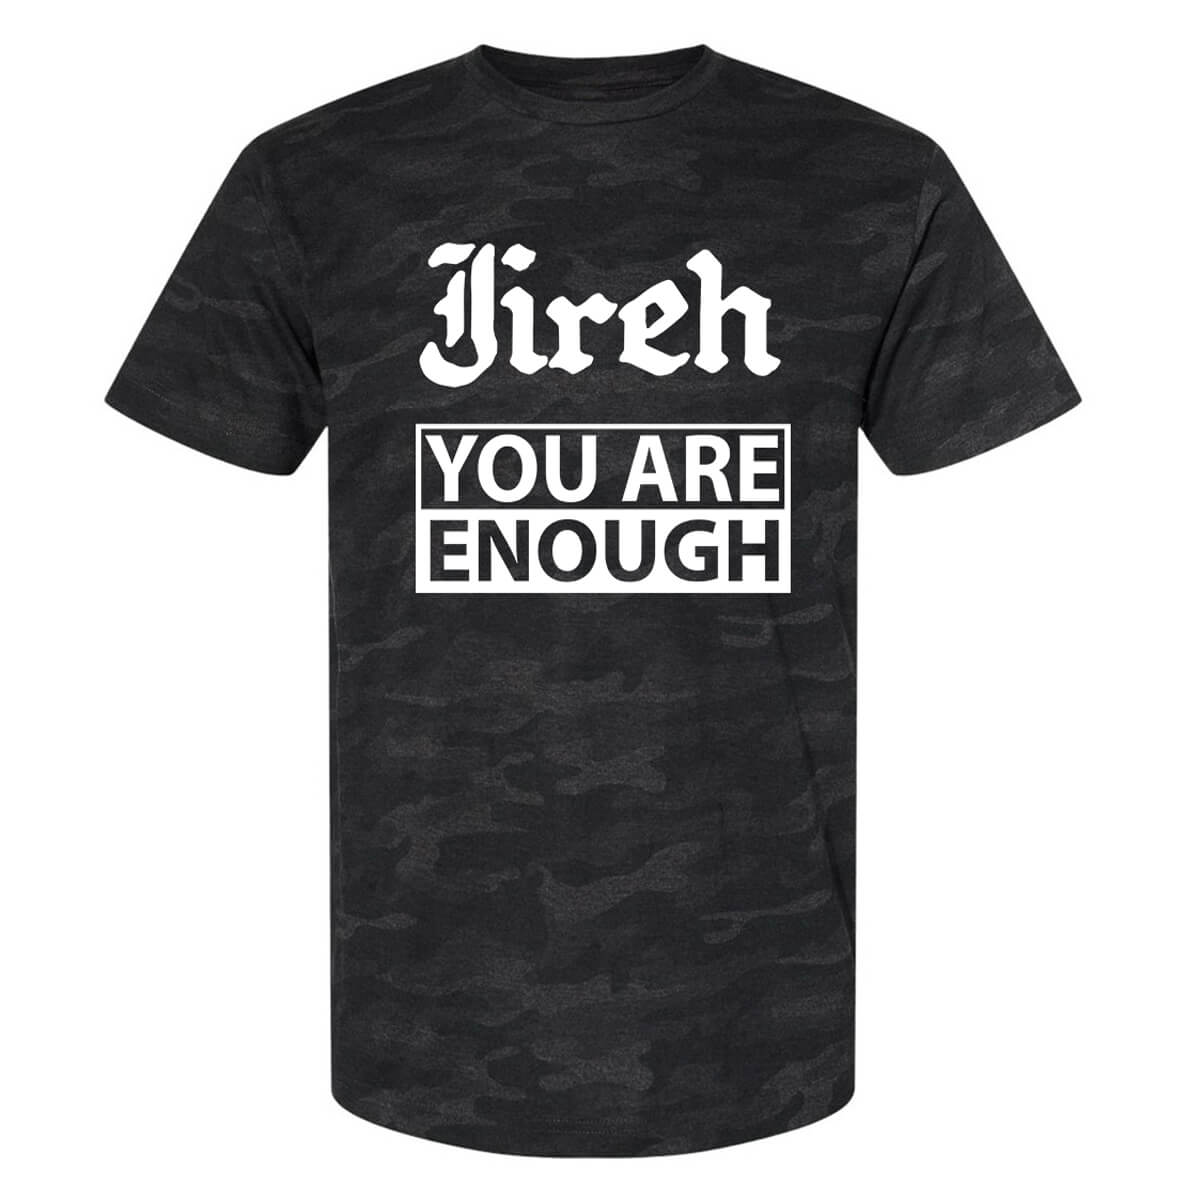 Jireh You Are Enough Men's Camo T-Shirt